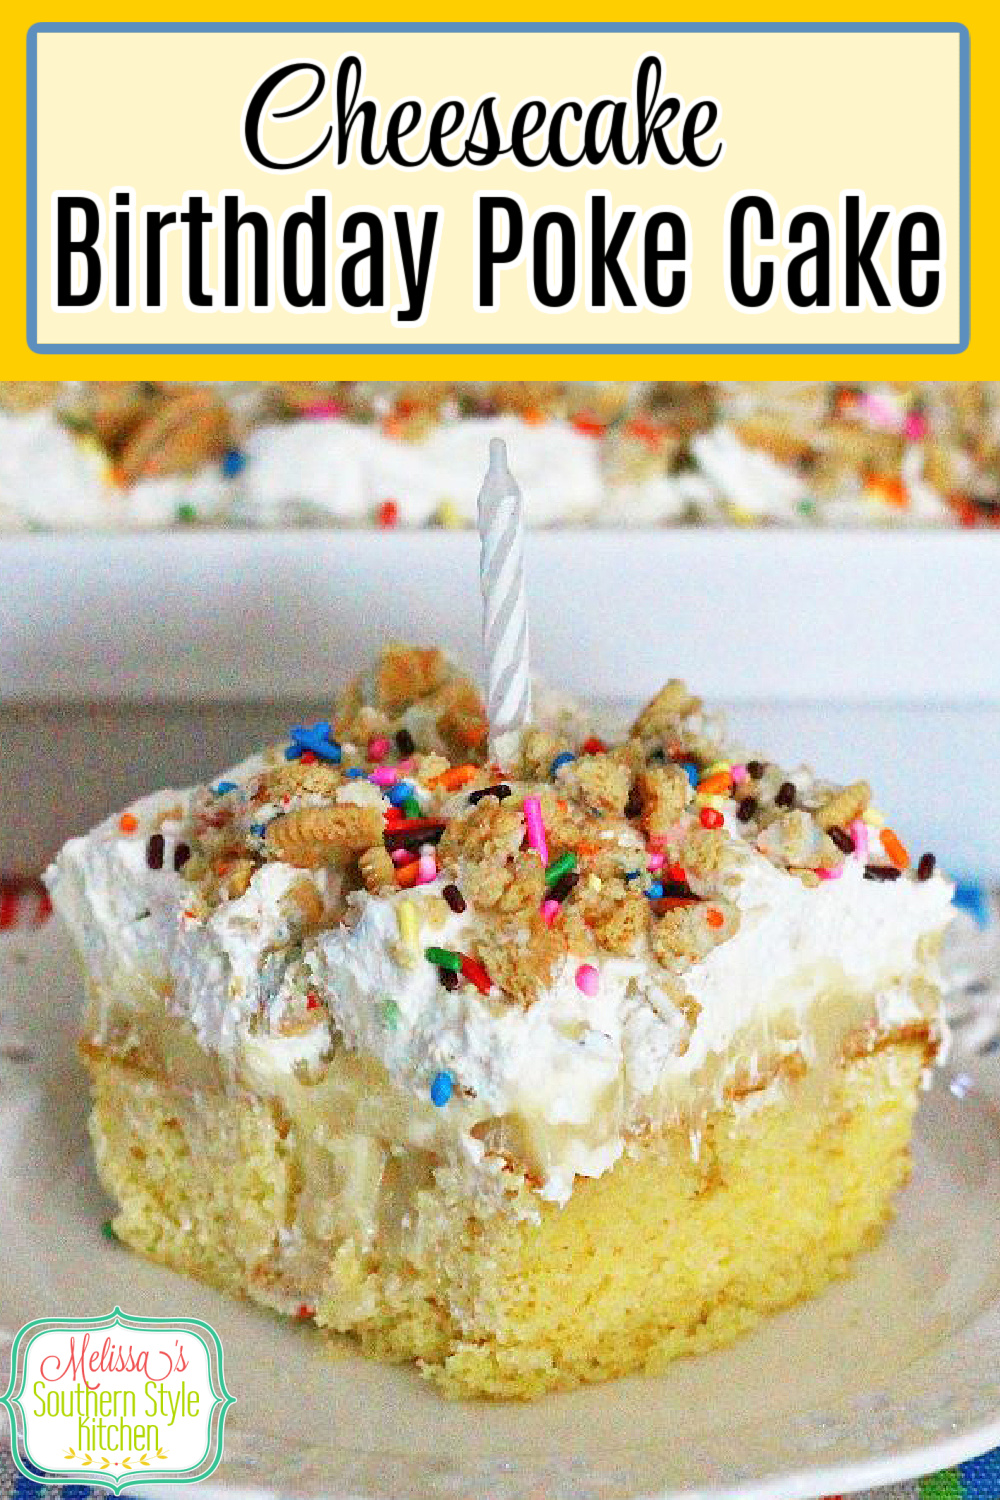 Party ready Cheesecake Birthday Poke Cake #birthdaycake #pokecake #cakerecipes #cakes #cheesecake #desserts #dessertfoodrecipes #southernfood #southernrecipes #partyfood